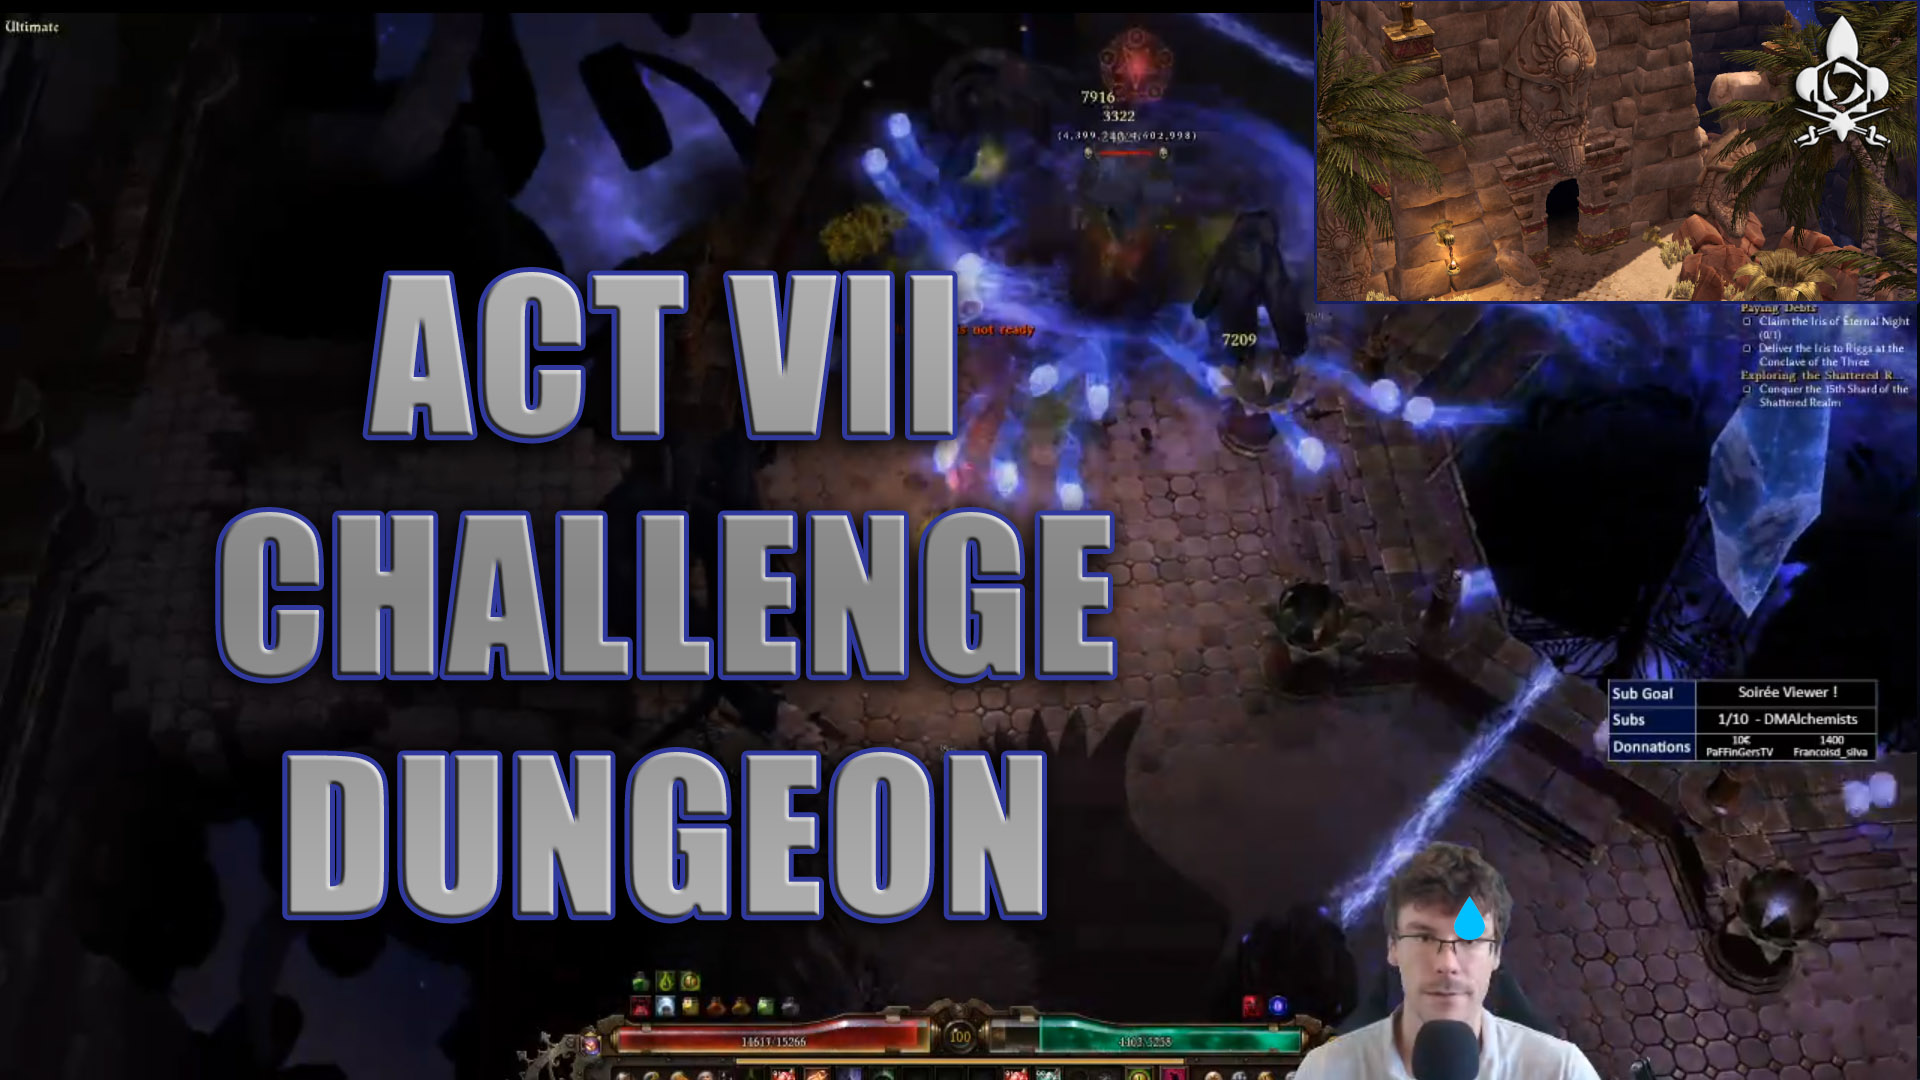 Act 7 dungeon challenge